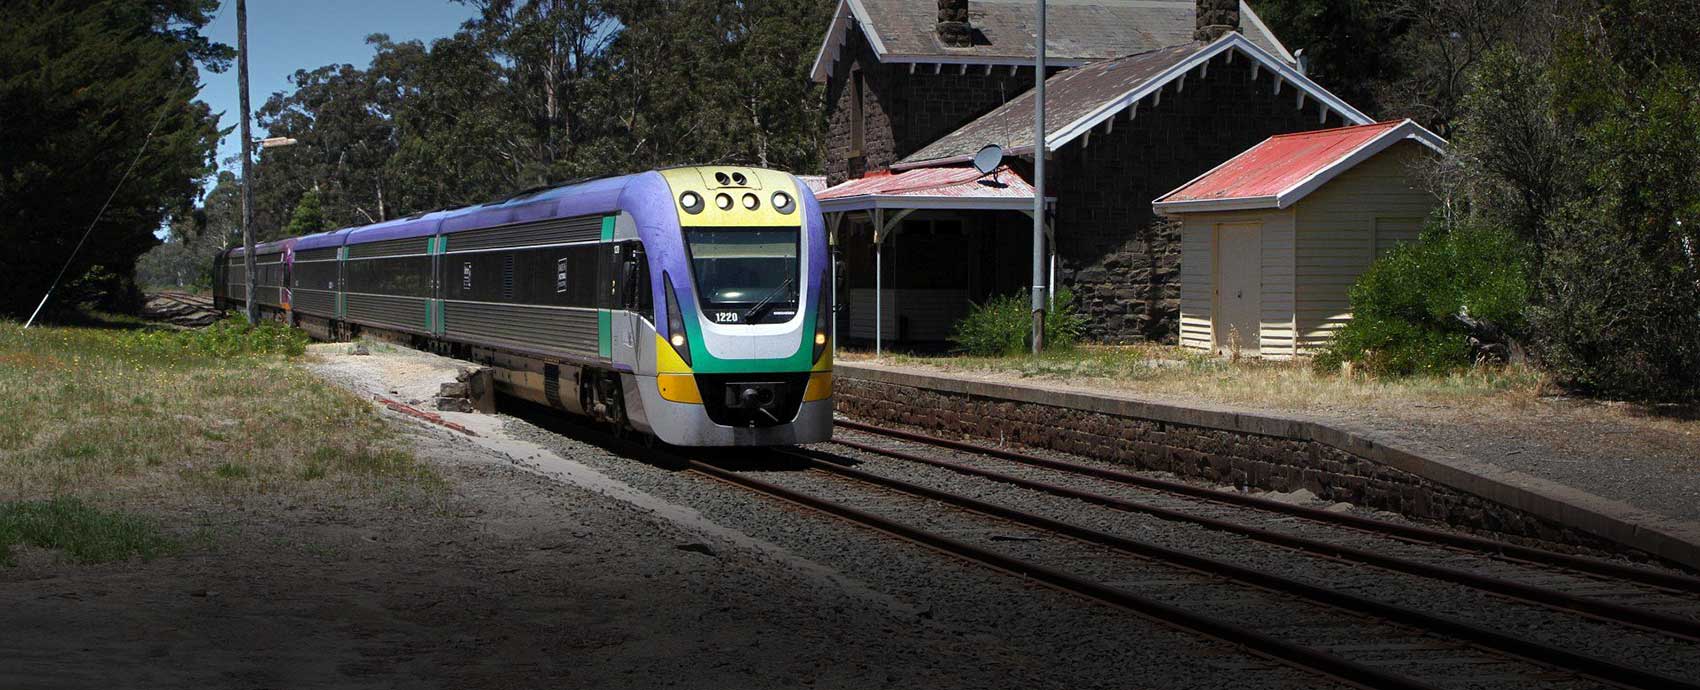 V/Line train in regional Victoria